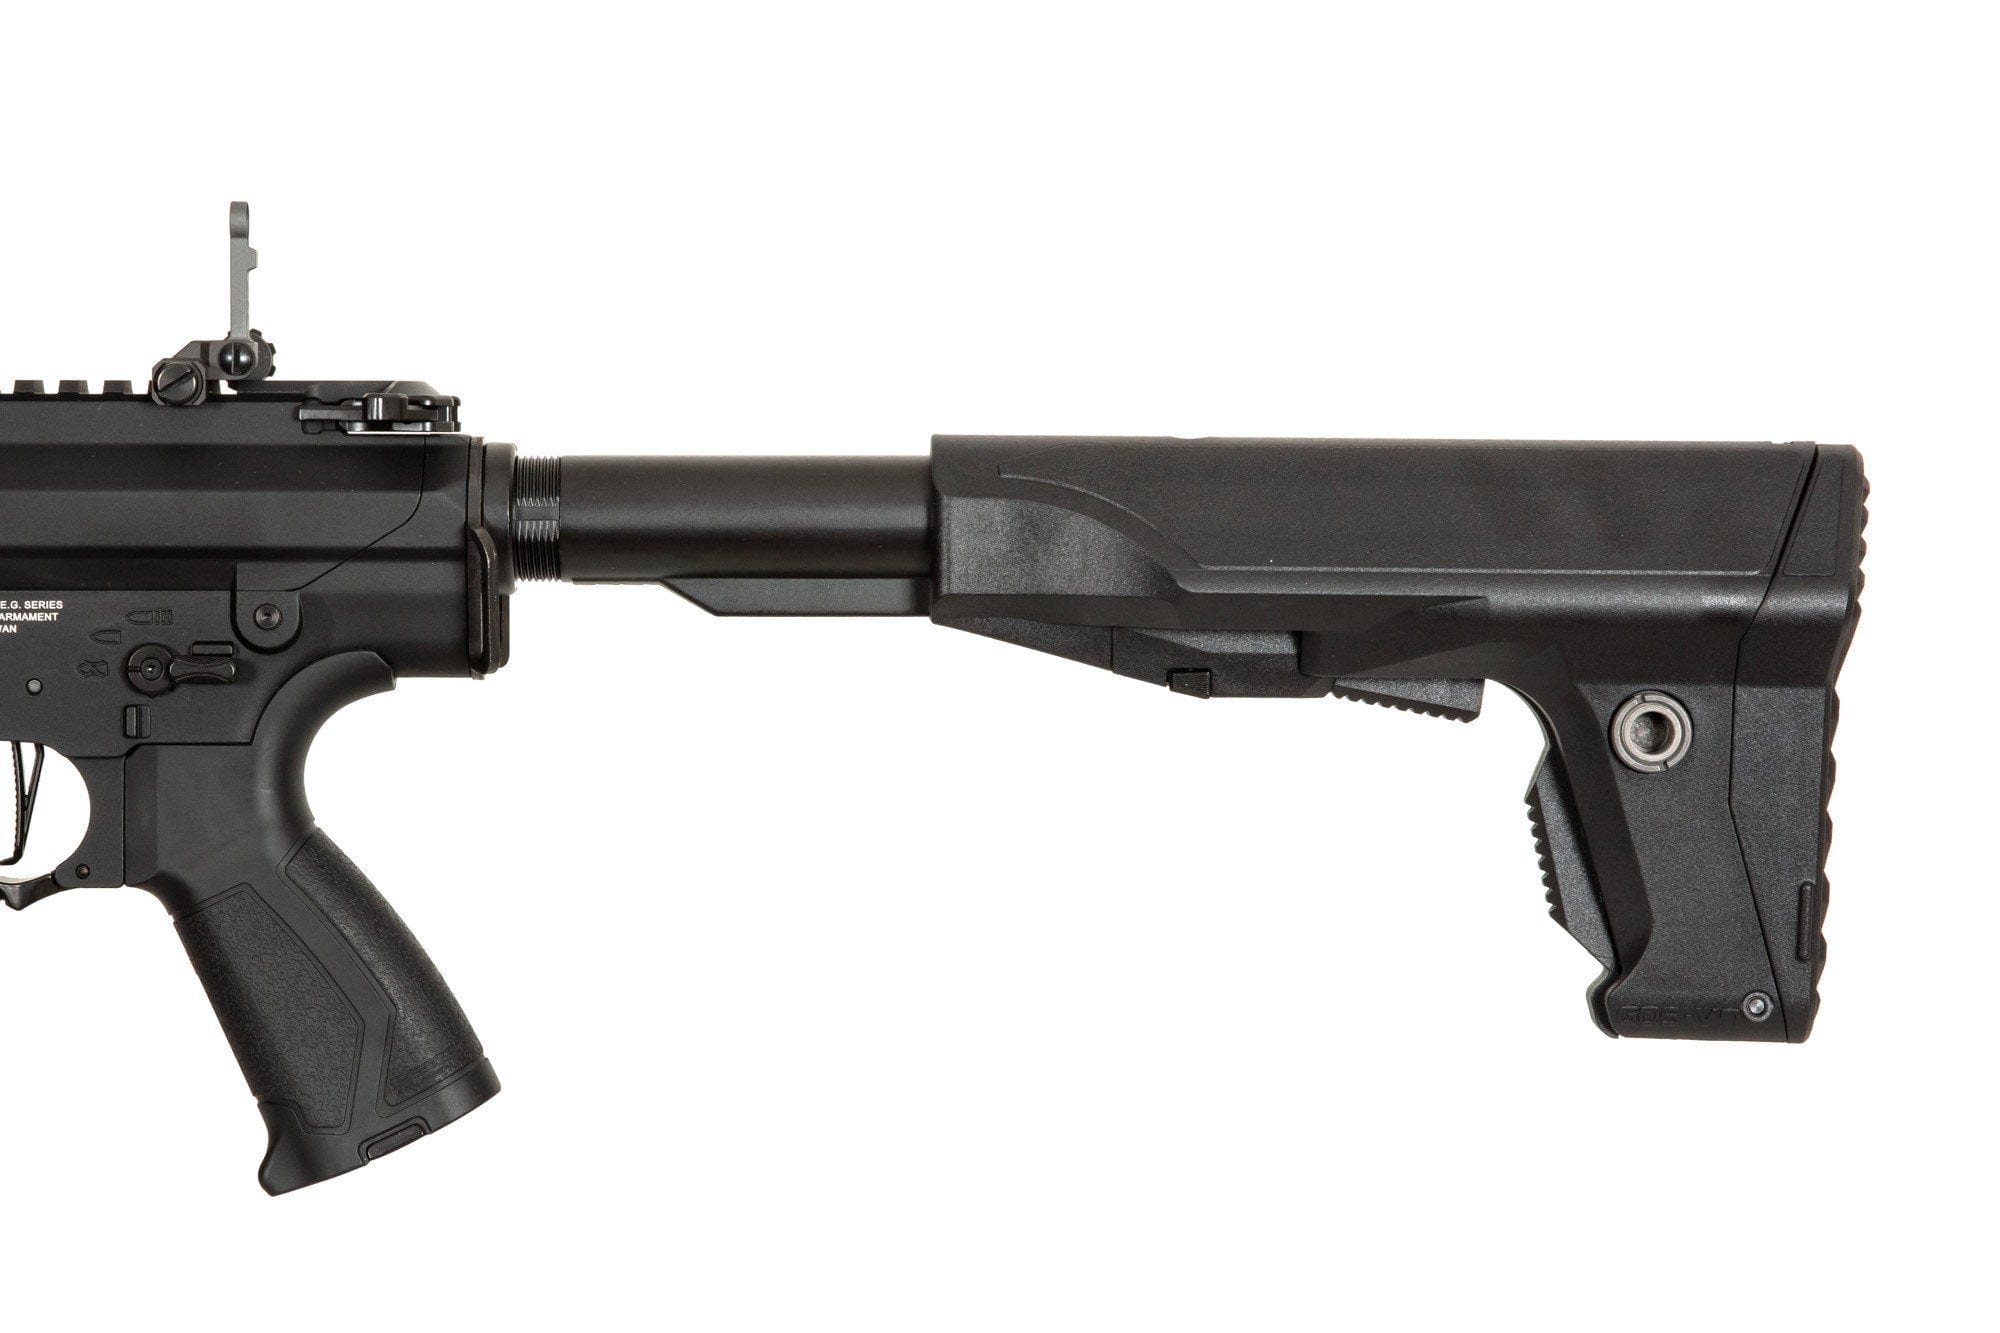 TR16 SBR 308 Mk1 carbine replica by G&G on Airsoft Mania Europe